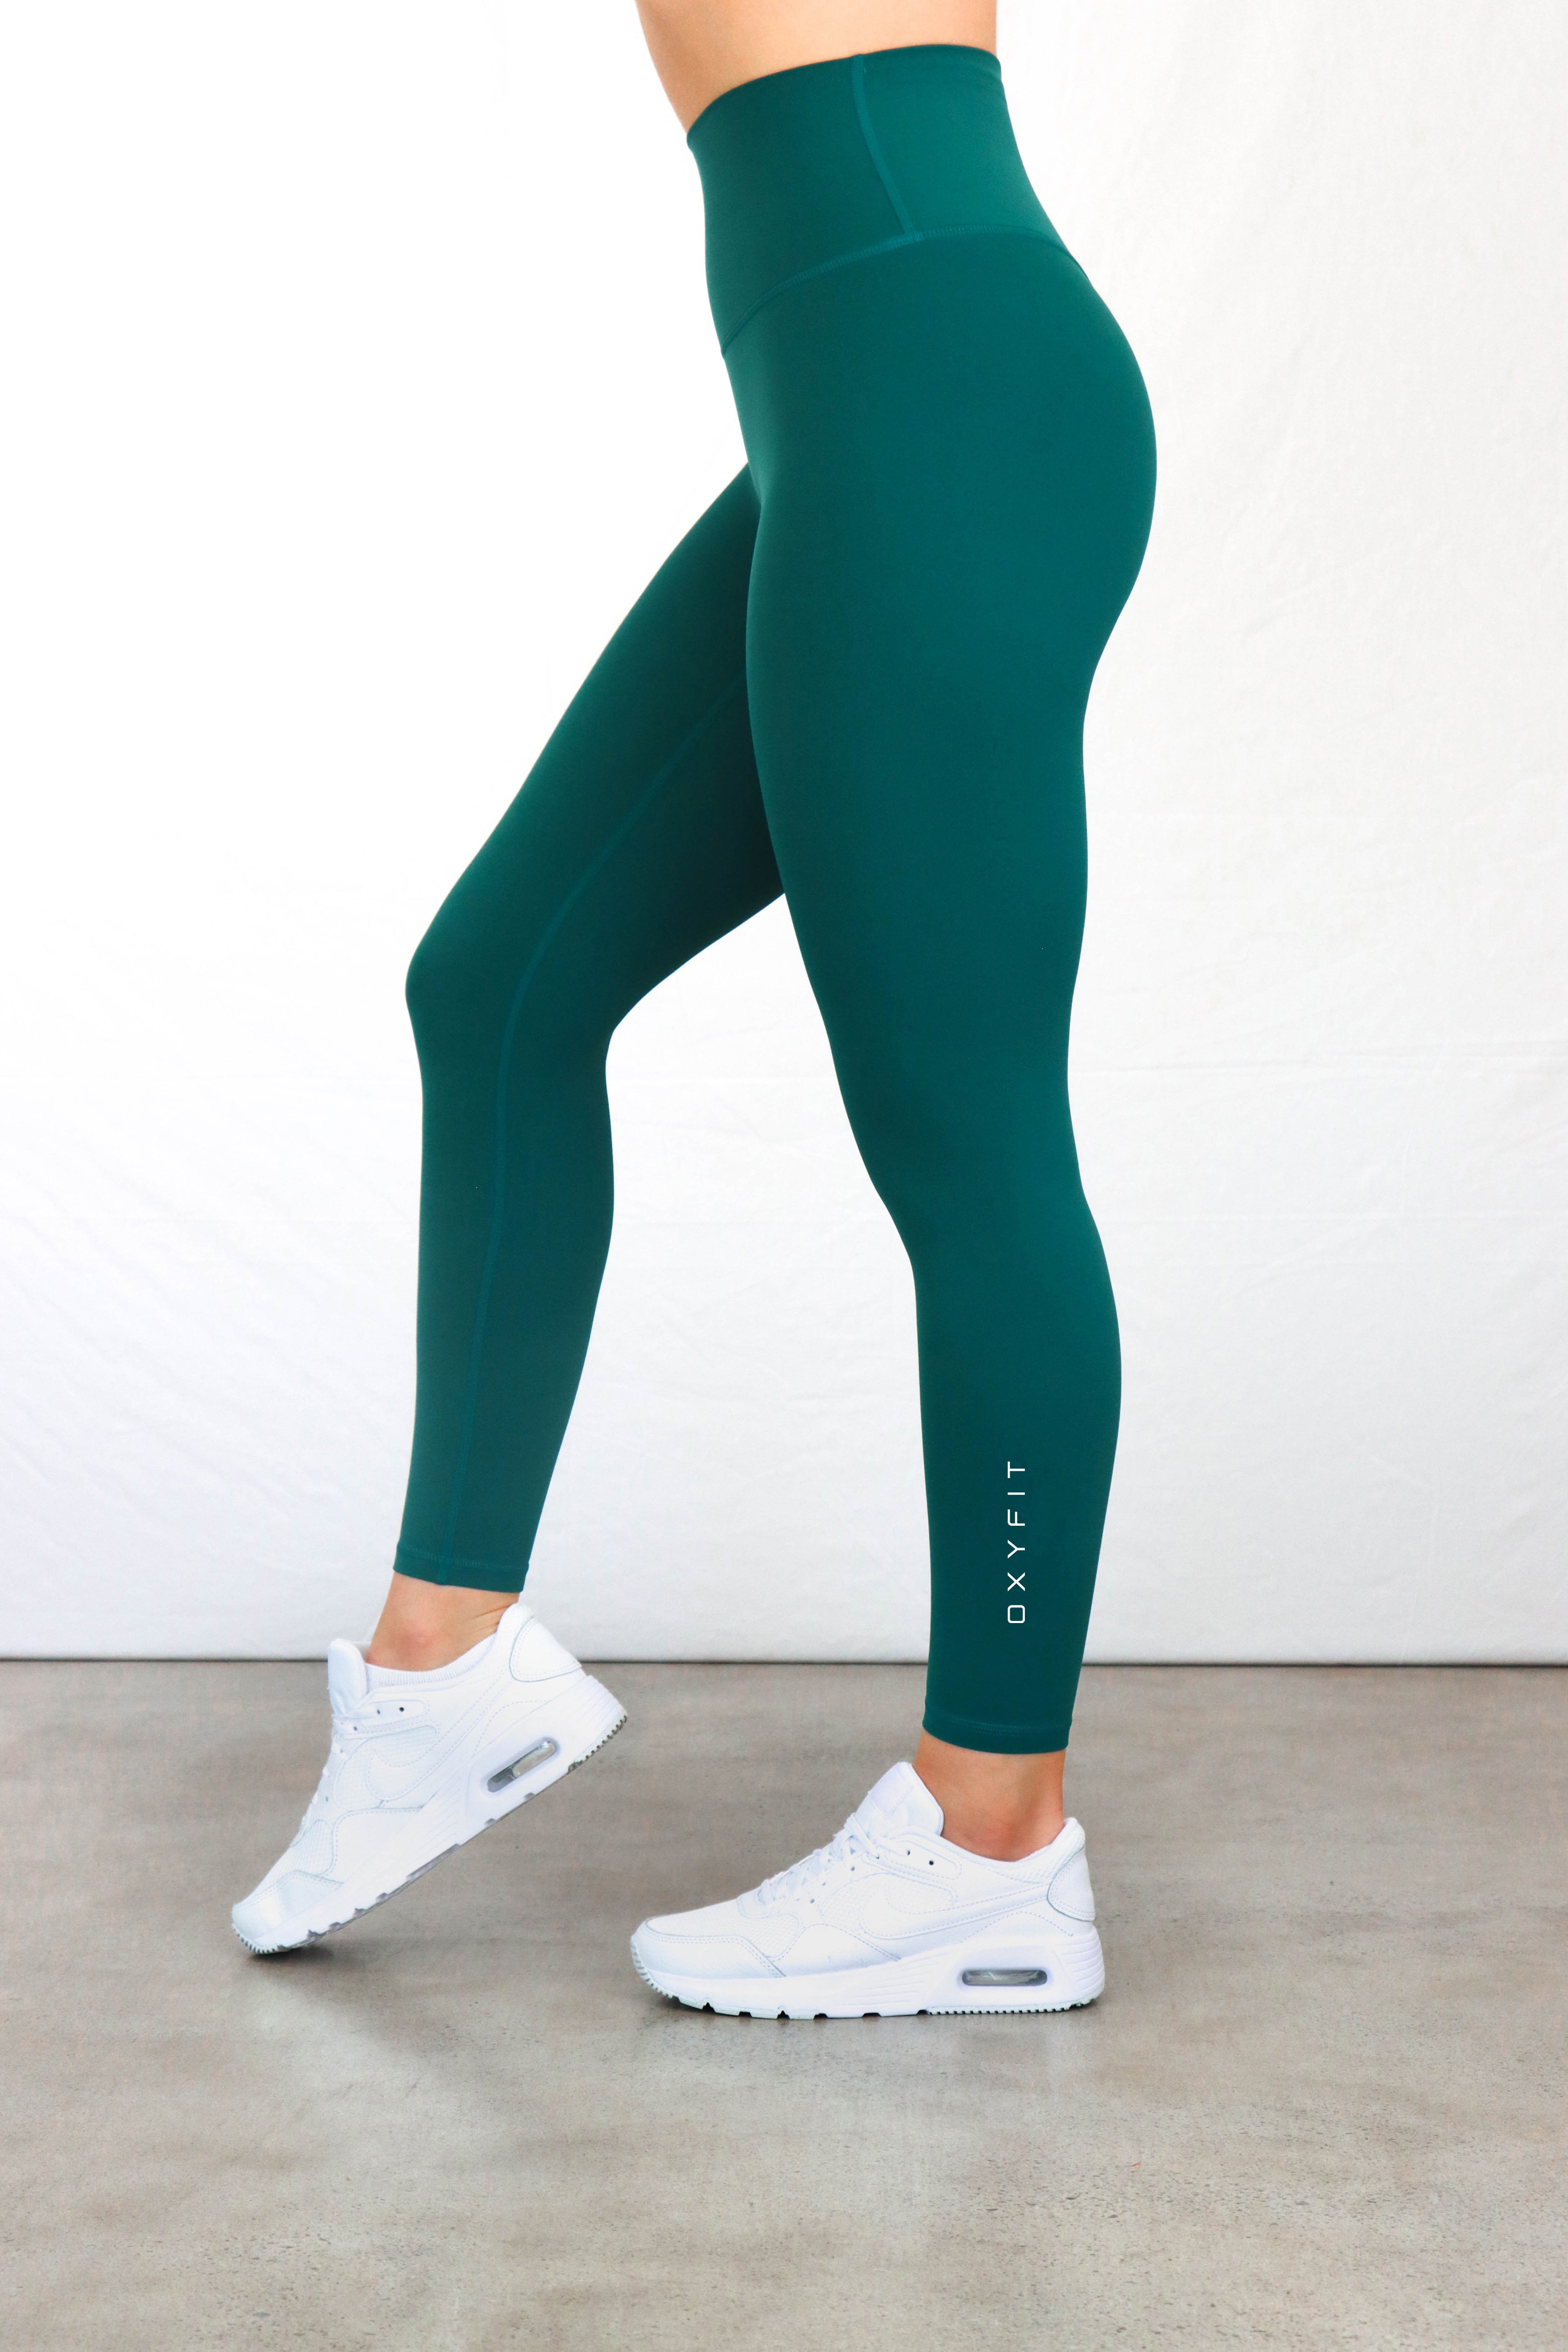 Women's XL Avalanche Army Green Leggings